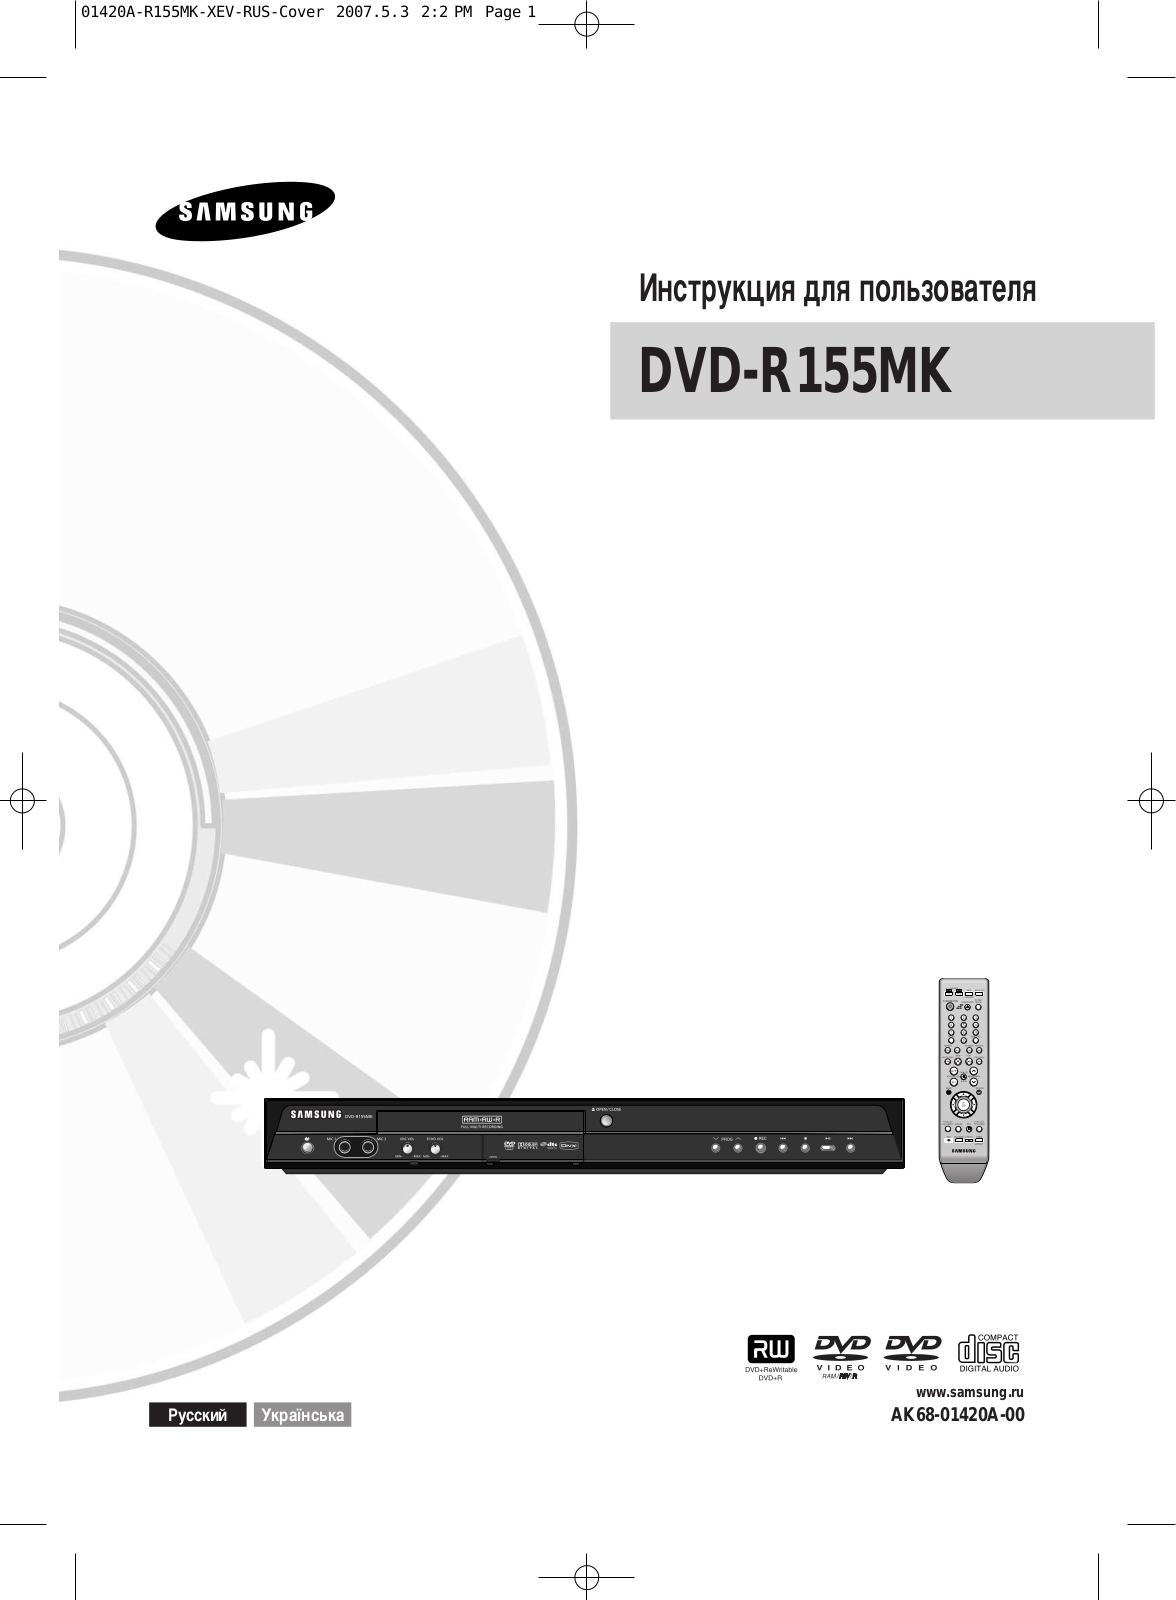 Samsung DVD-R155MK User Manual